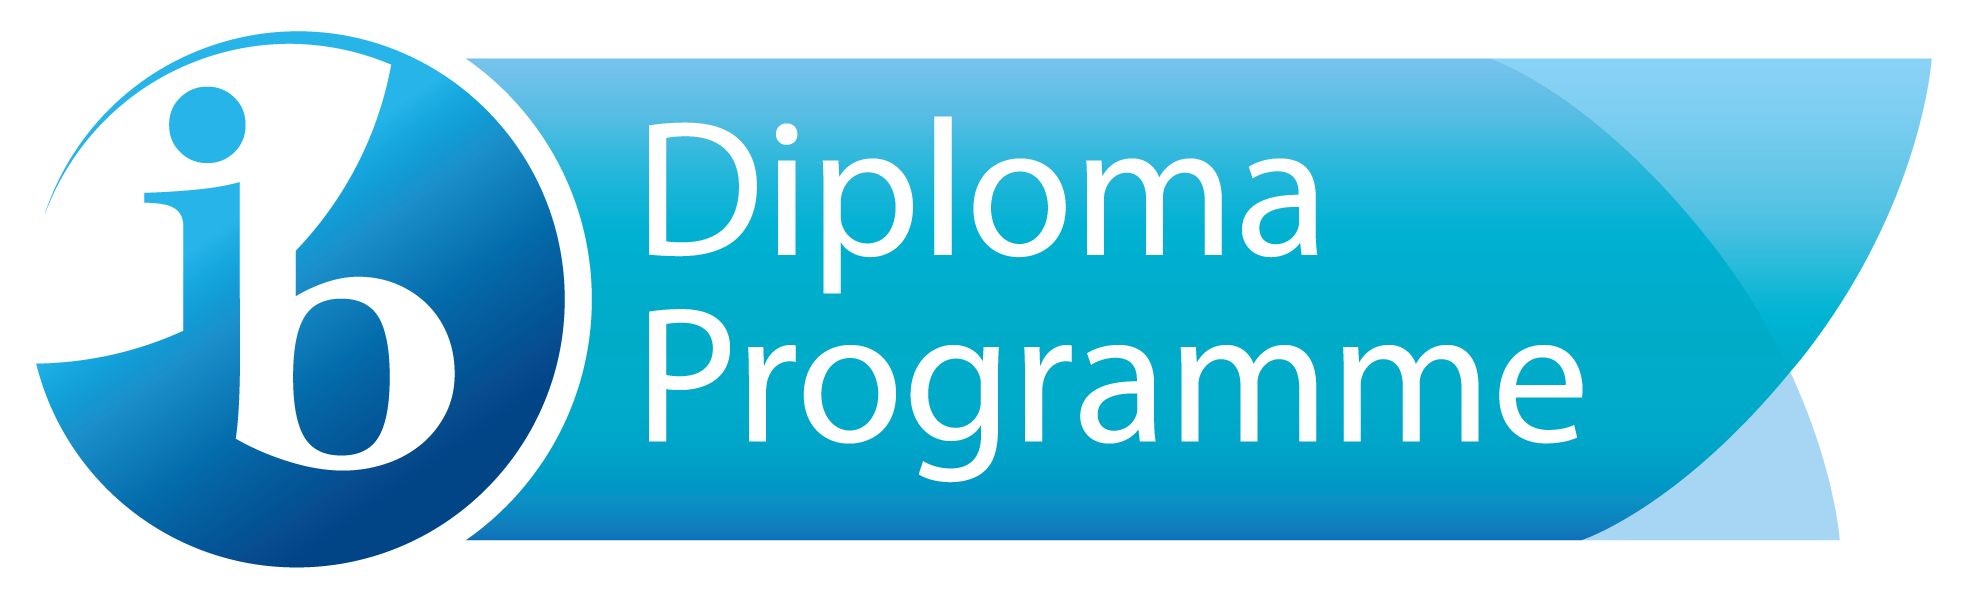 DP Diploma Programme IB Logo 